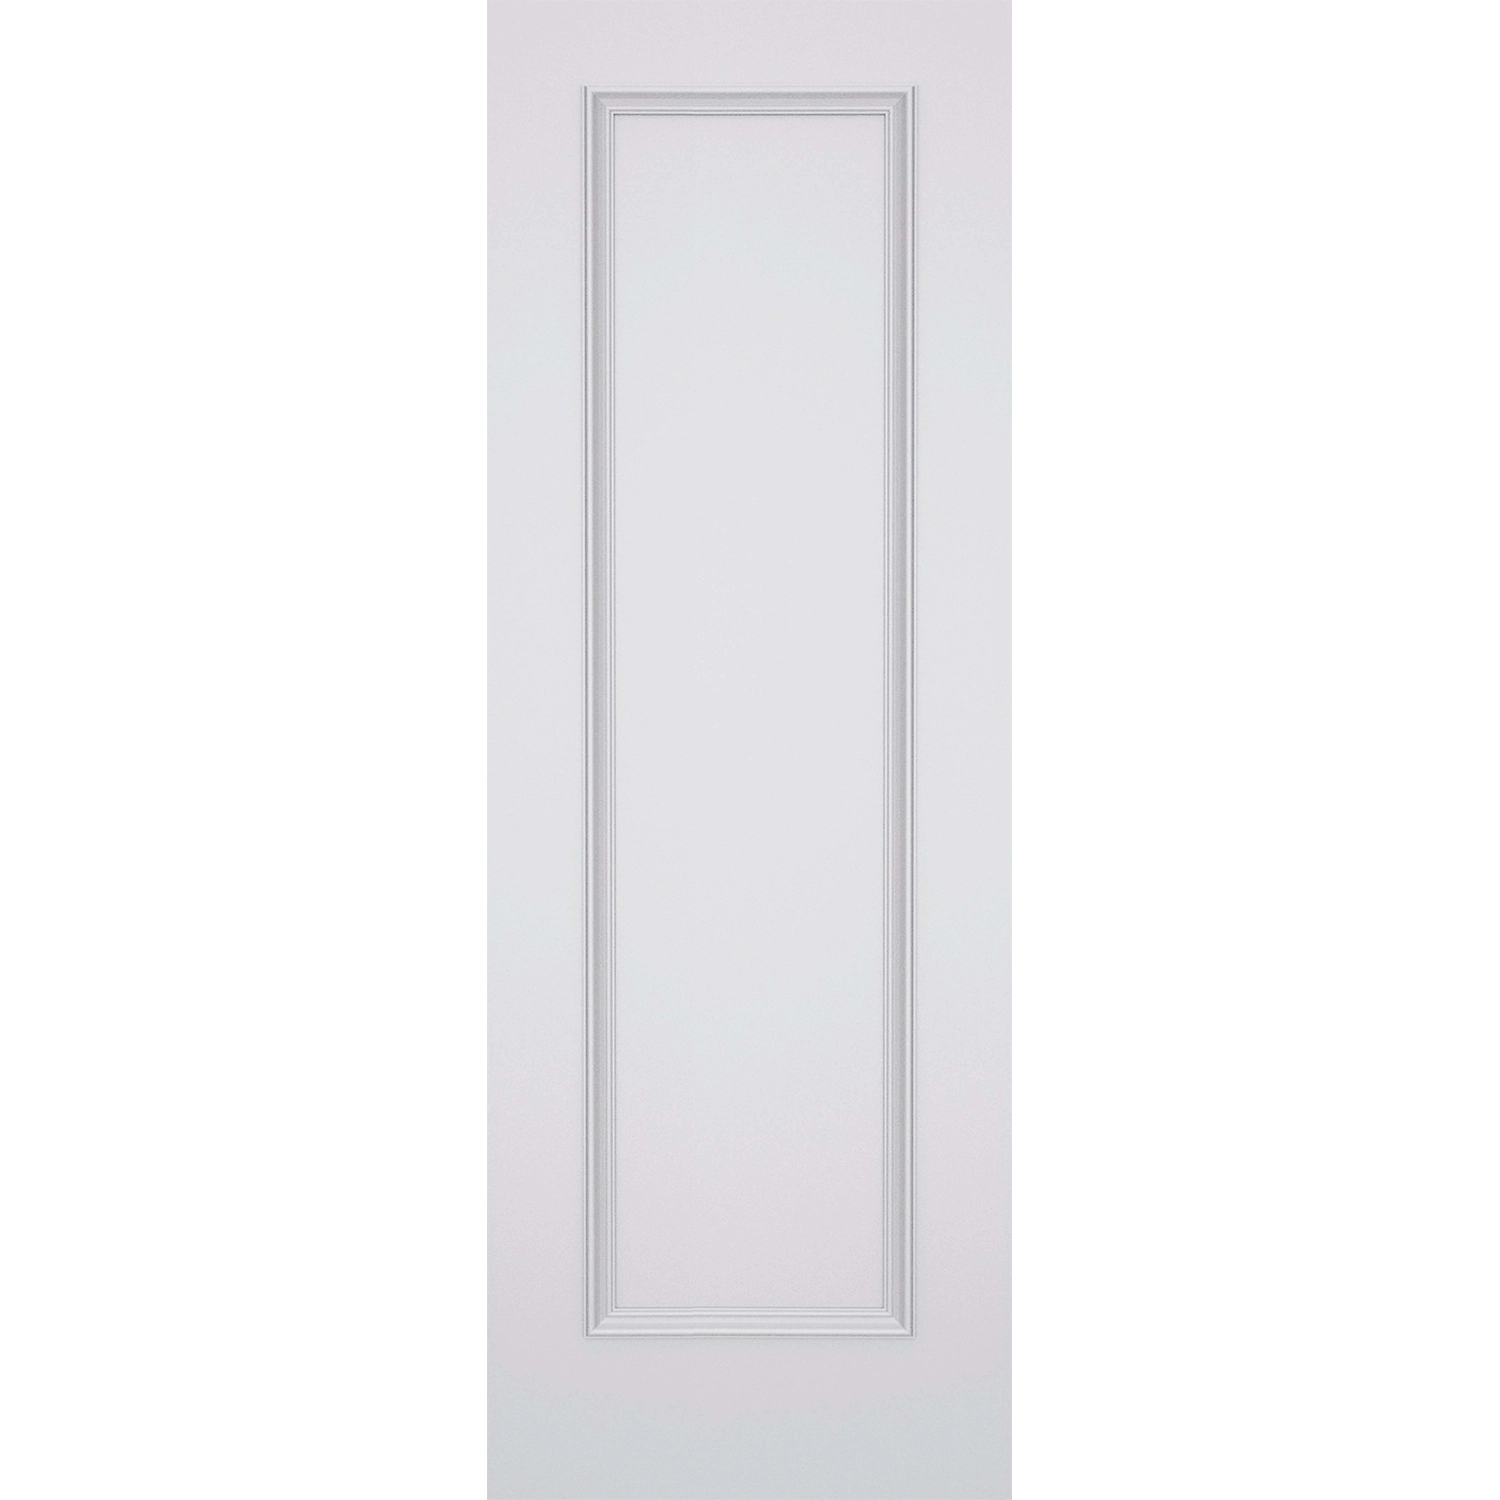 1 Panel 80 x 28 x 1-3/8 Smooth Hollow Door Raised